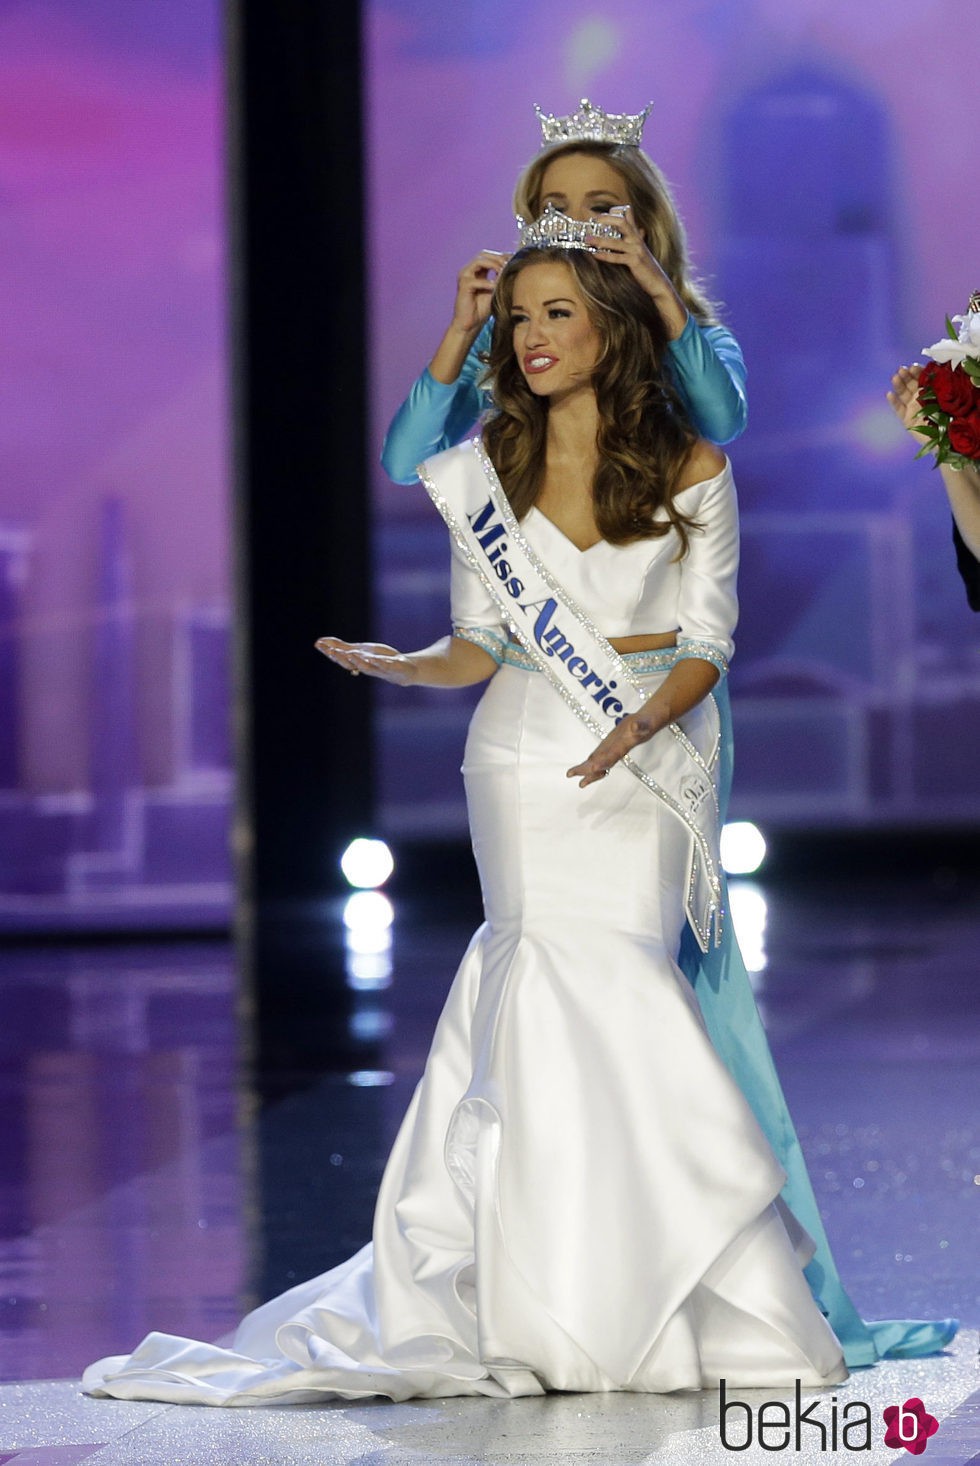 Betty Cantrell es coronada Miss América 2016